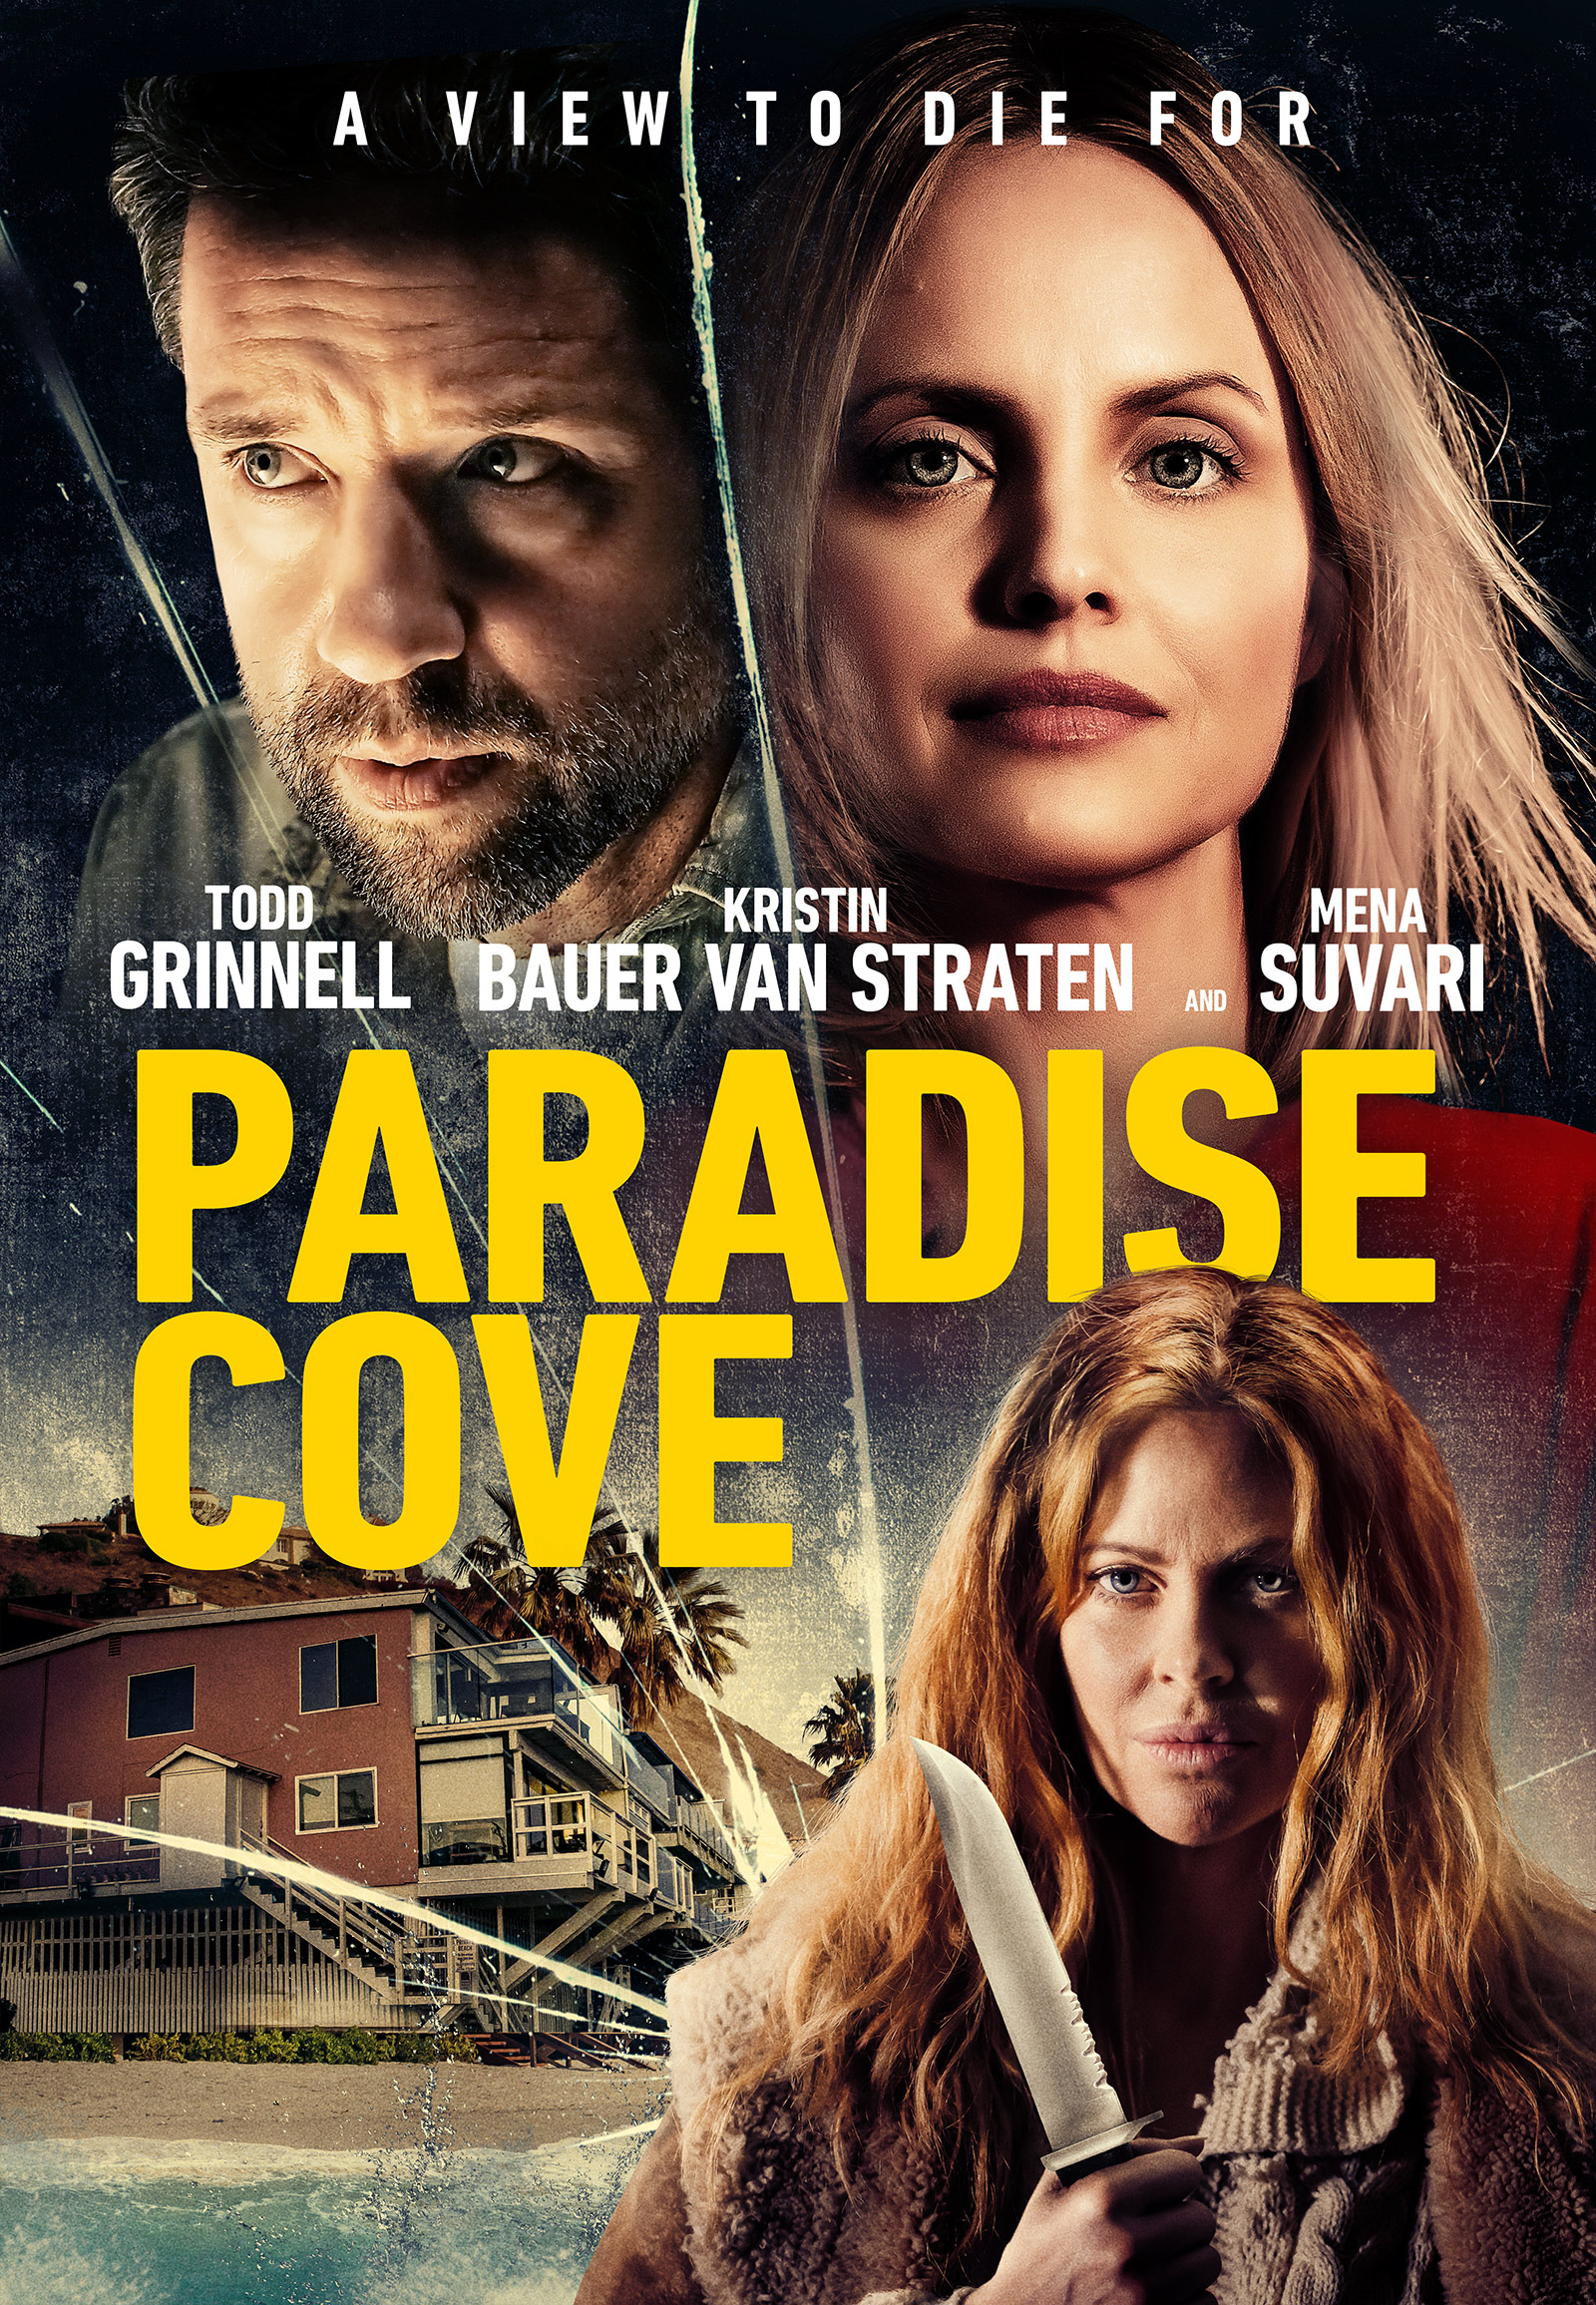 Paradise Cove Mena Suvari Todd Grinnell Kristin Bauer van Straten